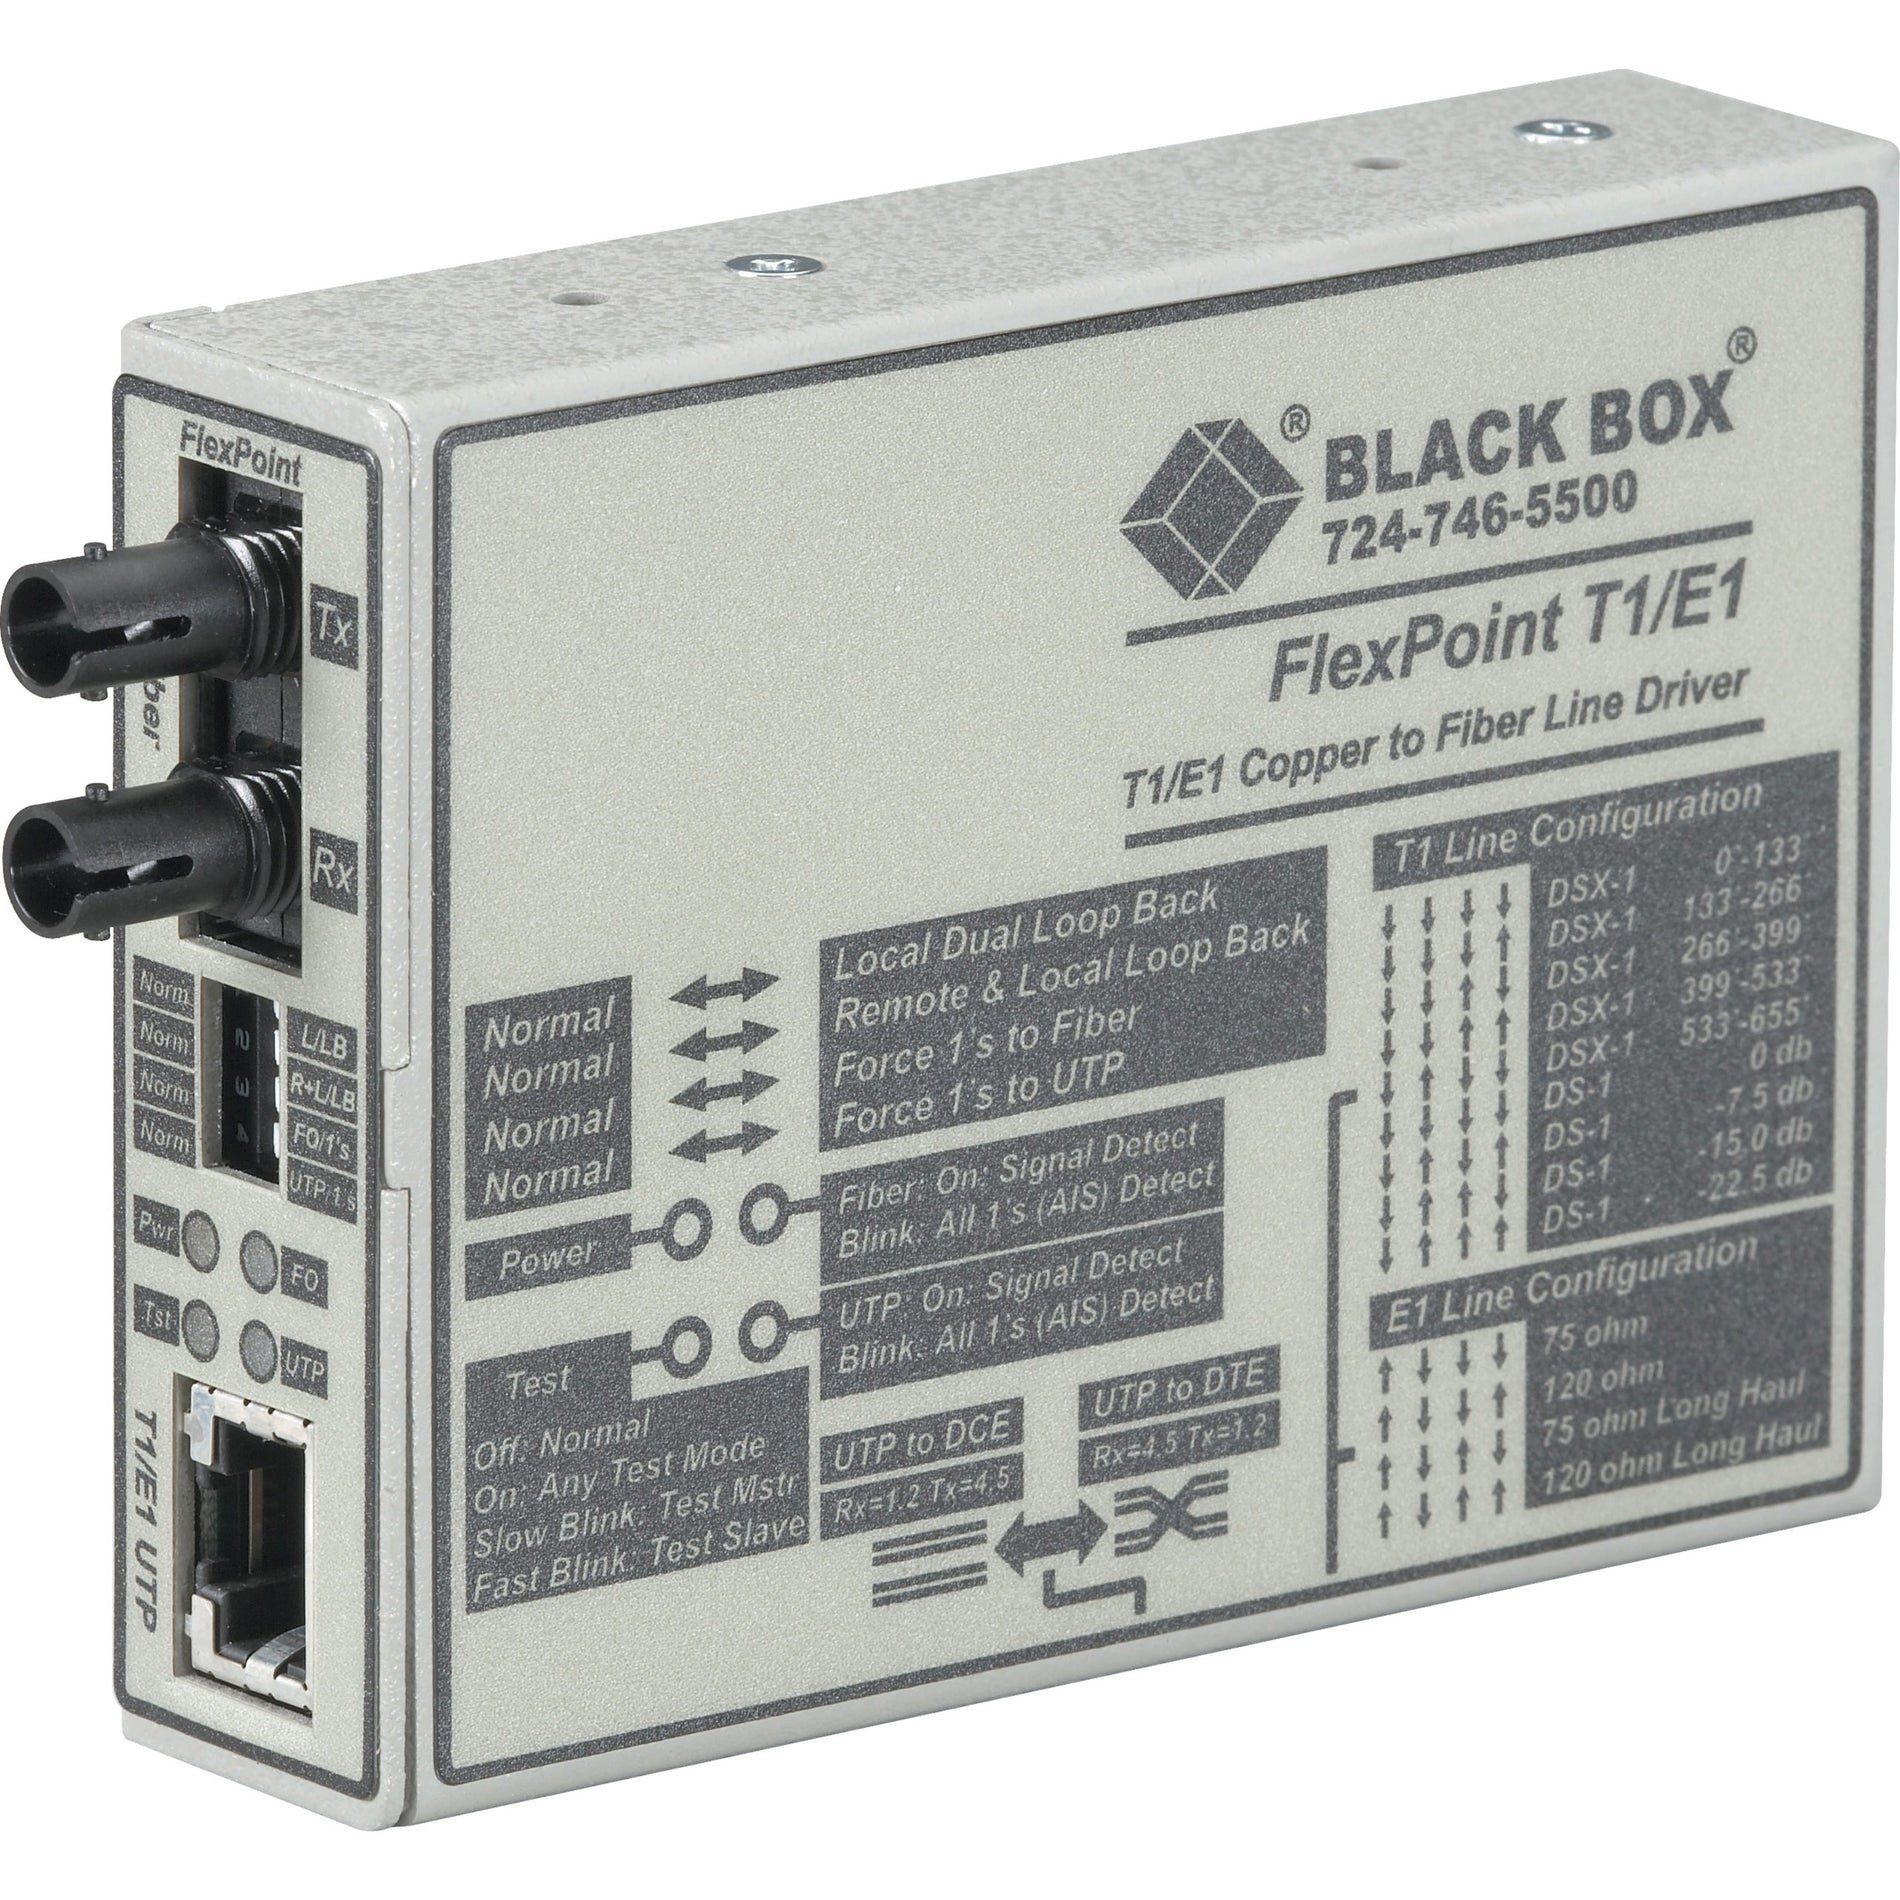 Black Box MT660A-MM FlexPoint T1/E1 to Fiber Converter, Easy to Install, Extensive Diagnostics, LED Display